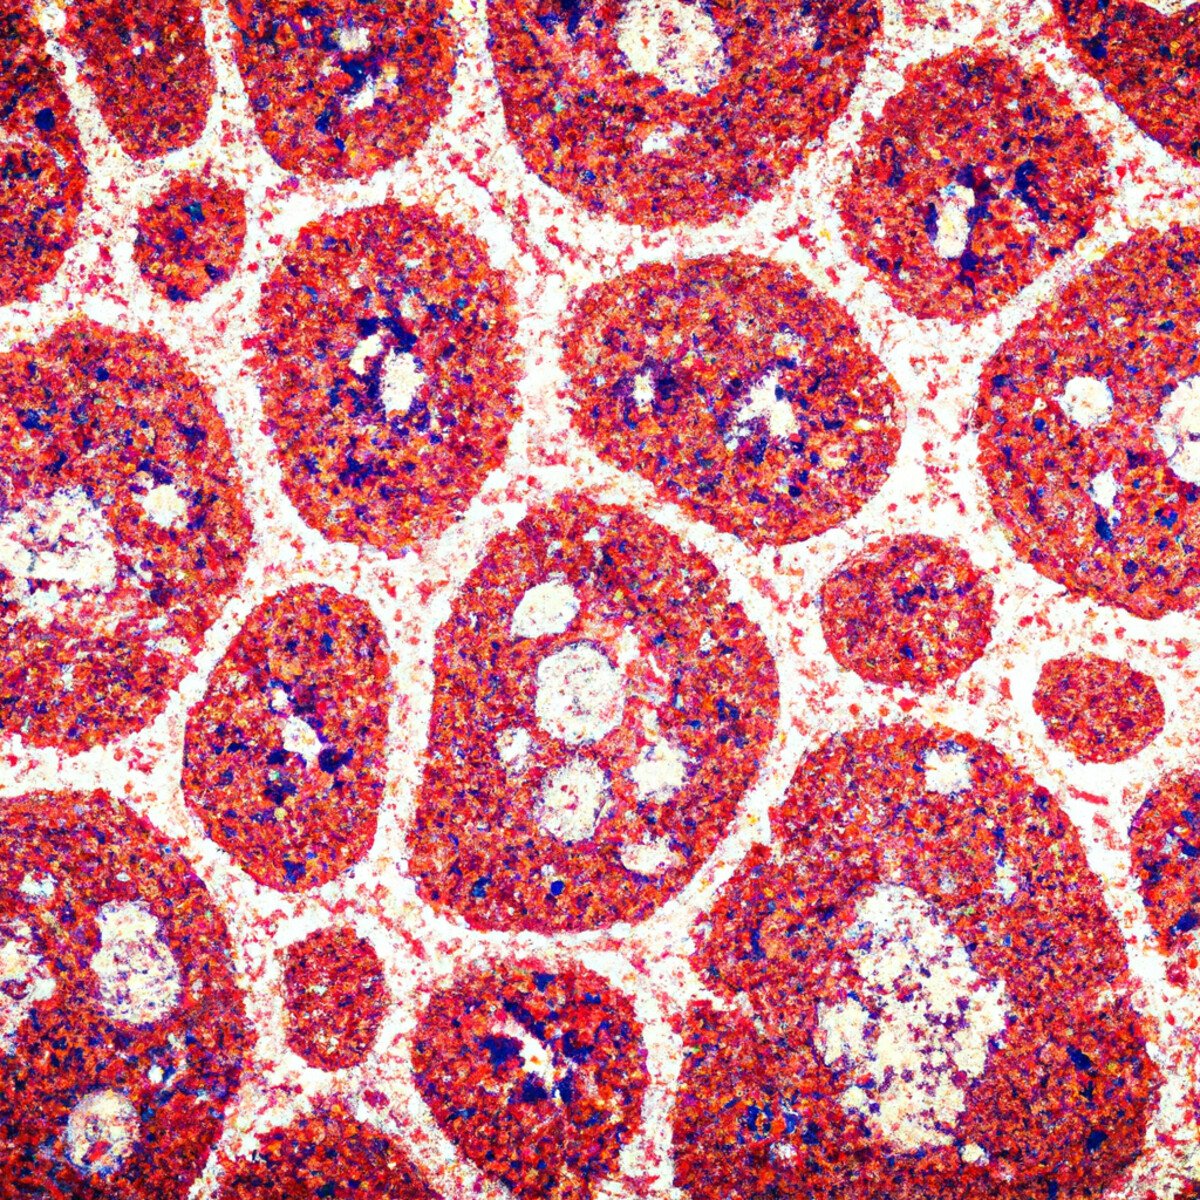 Close-up of kidney tissue sample showing abnormal protein deposits in glomeruli, indicating immune system dysfunction in Dense Deposit Disease.